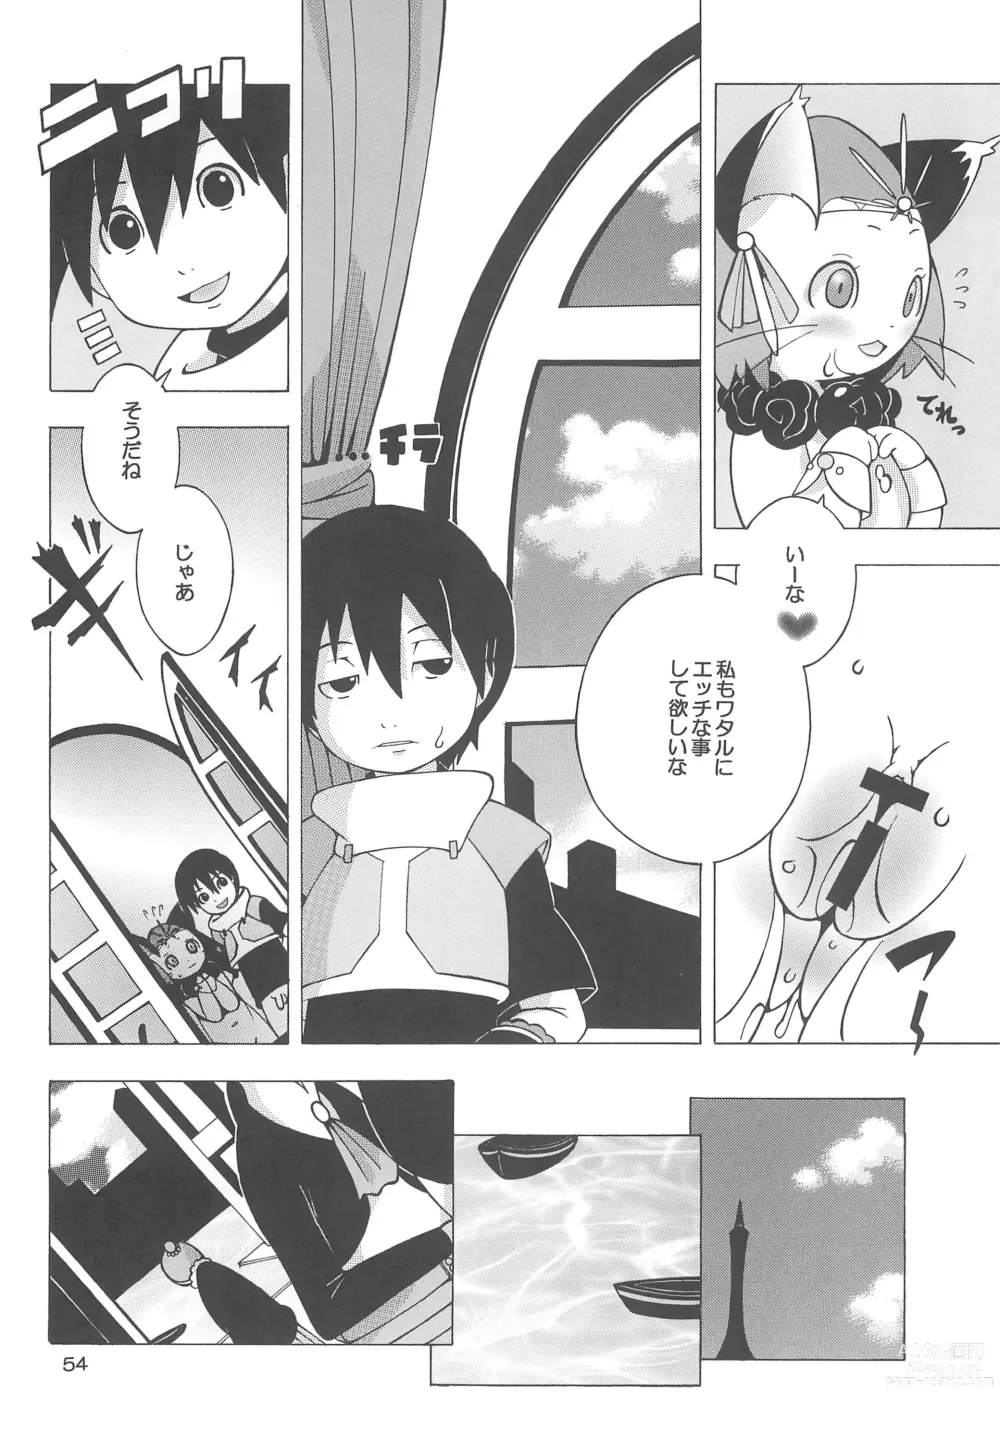 Page 54 of doujinshi Watamii!